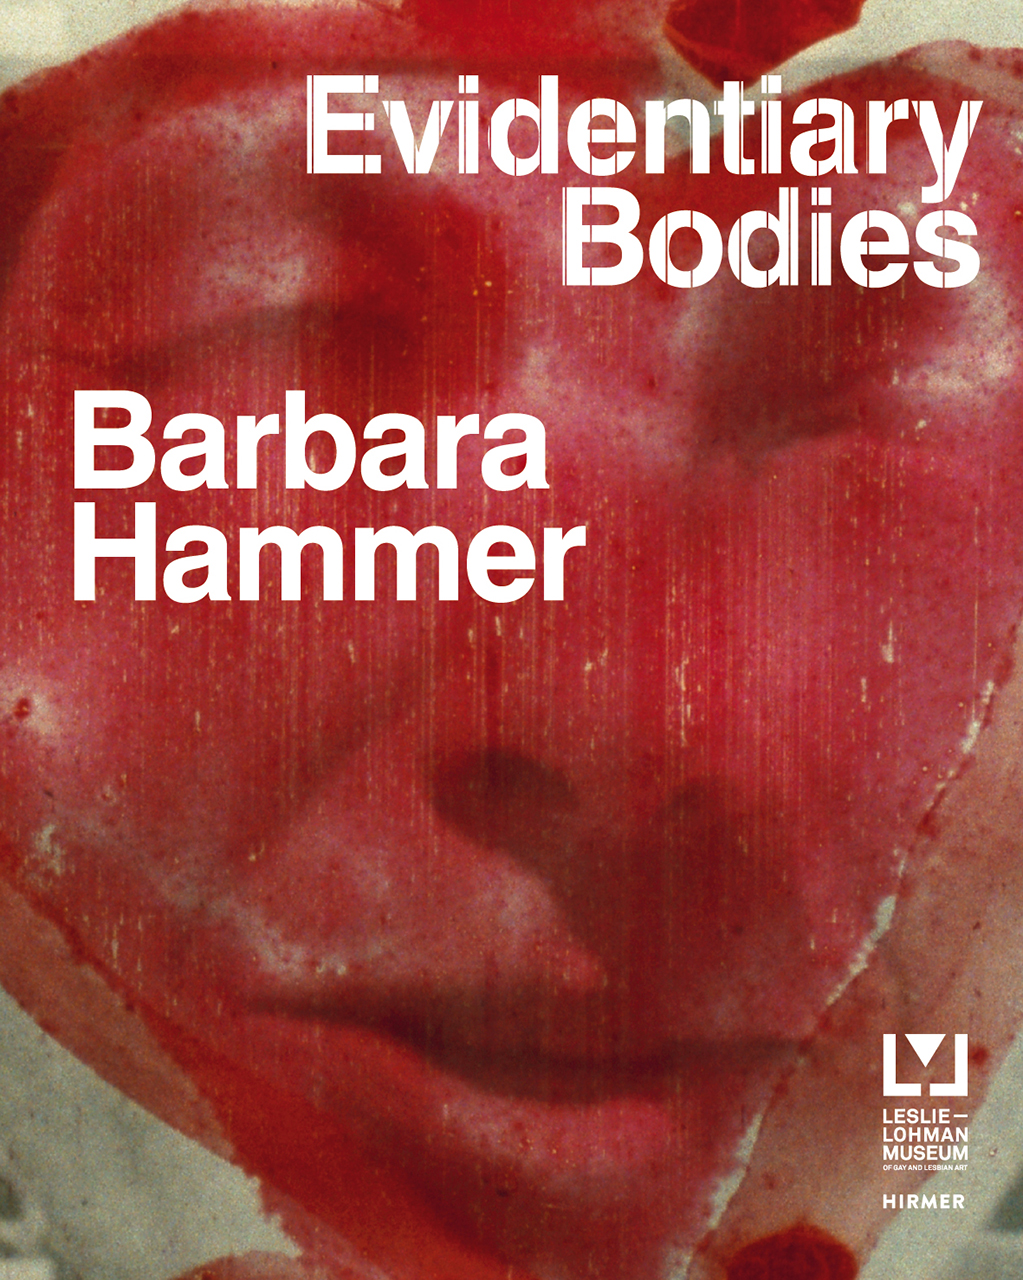 Evidentiary Bodies book - Barbara Hammer